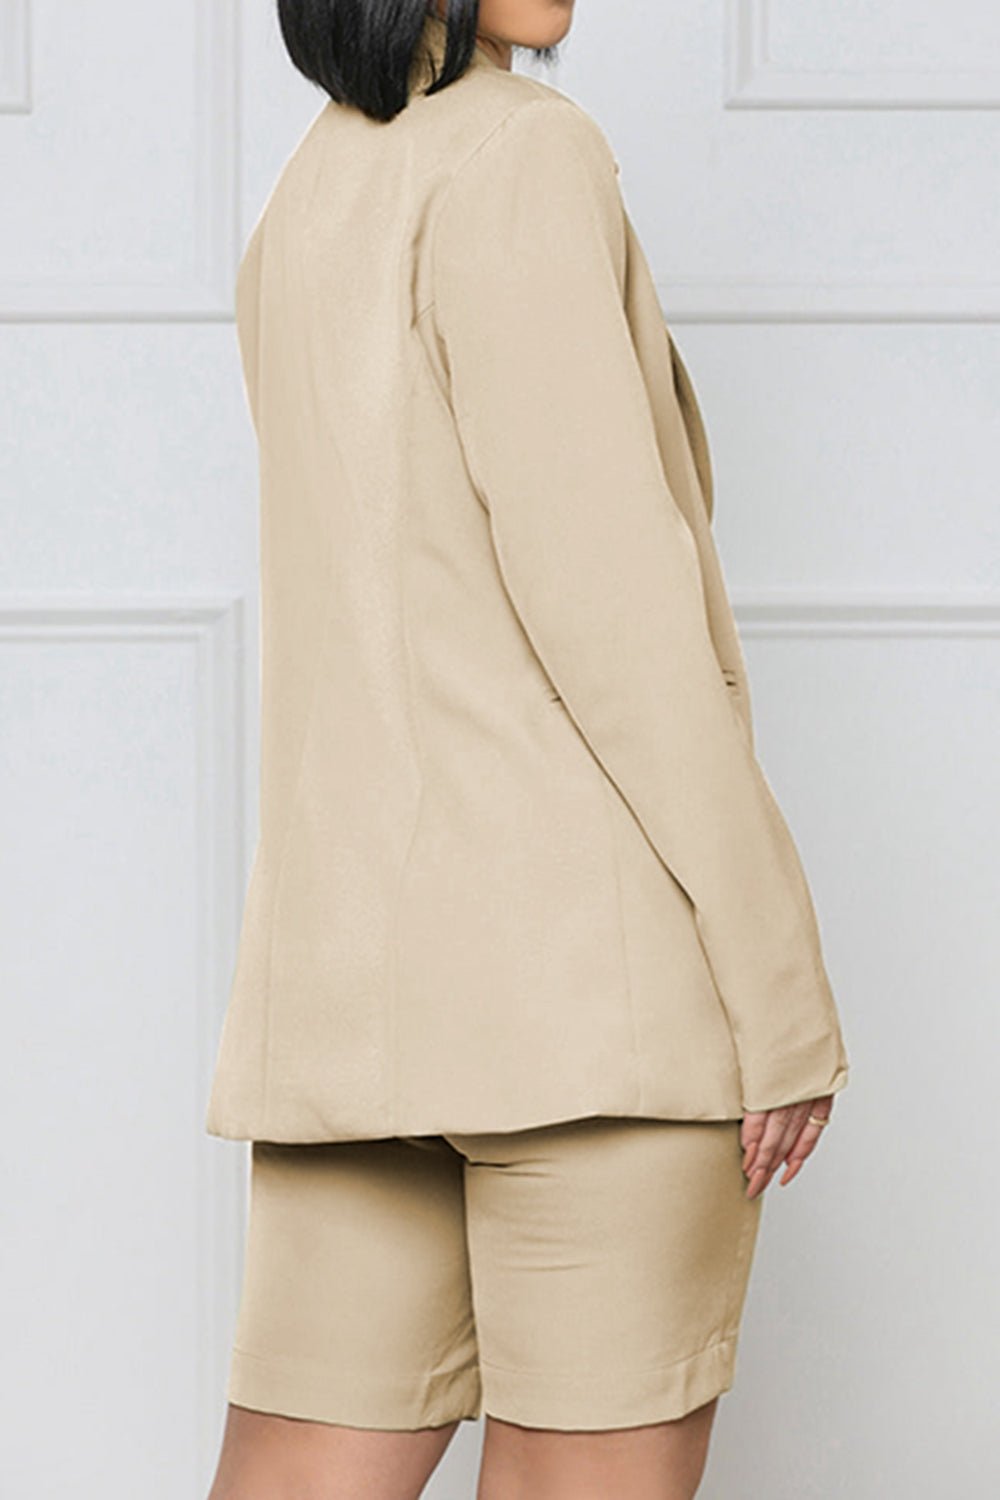 Long Sleeve Blazer and Shorts Set | Sugarz Chique Boutique